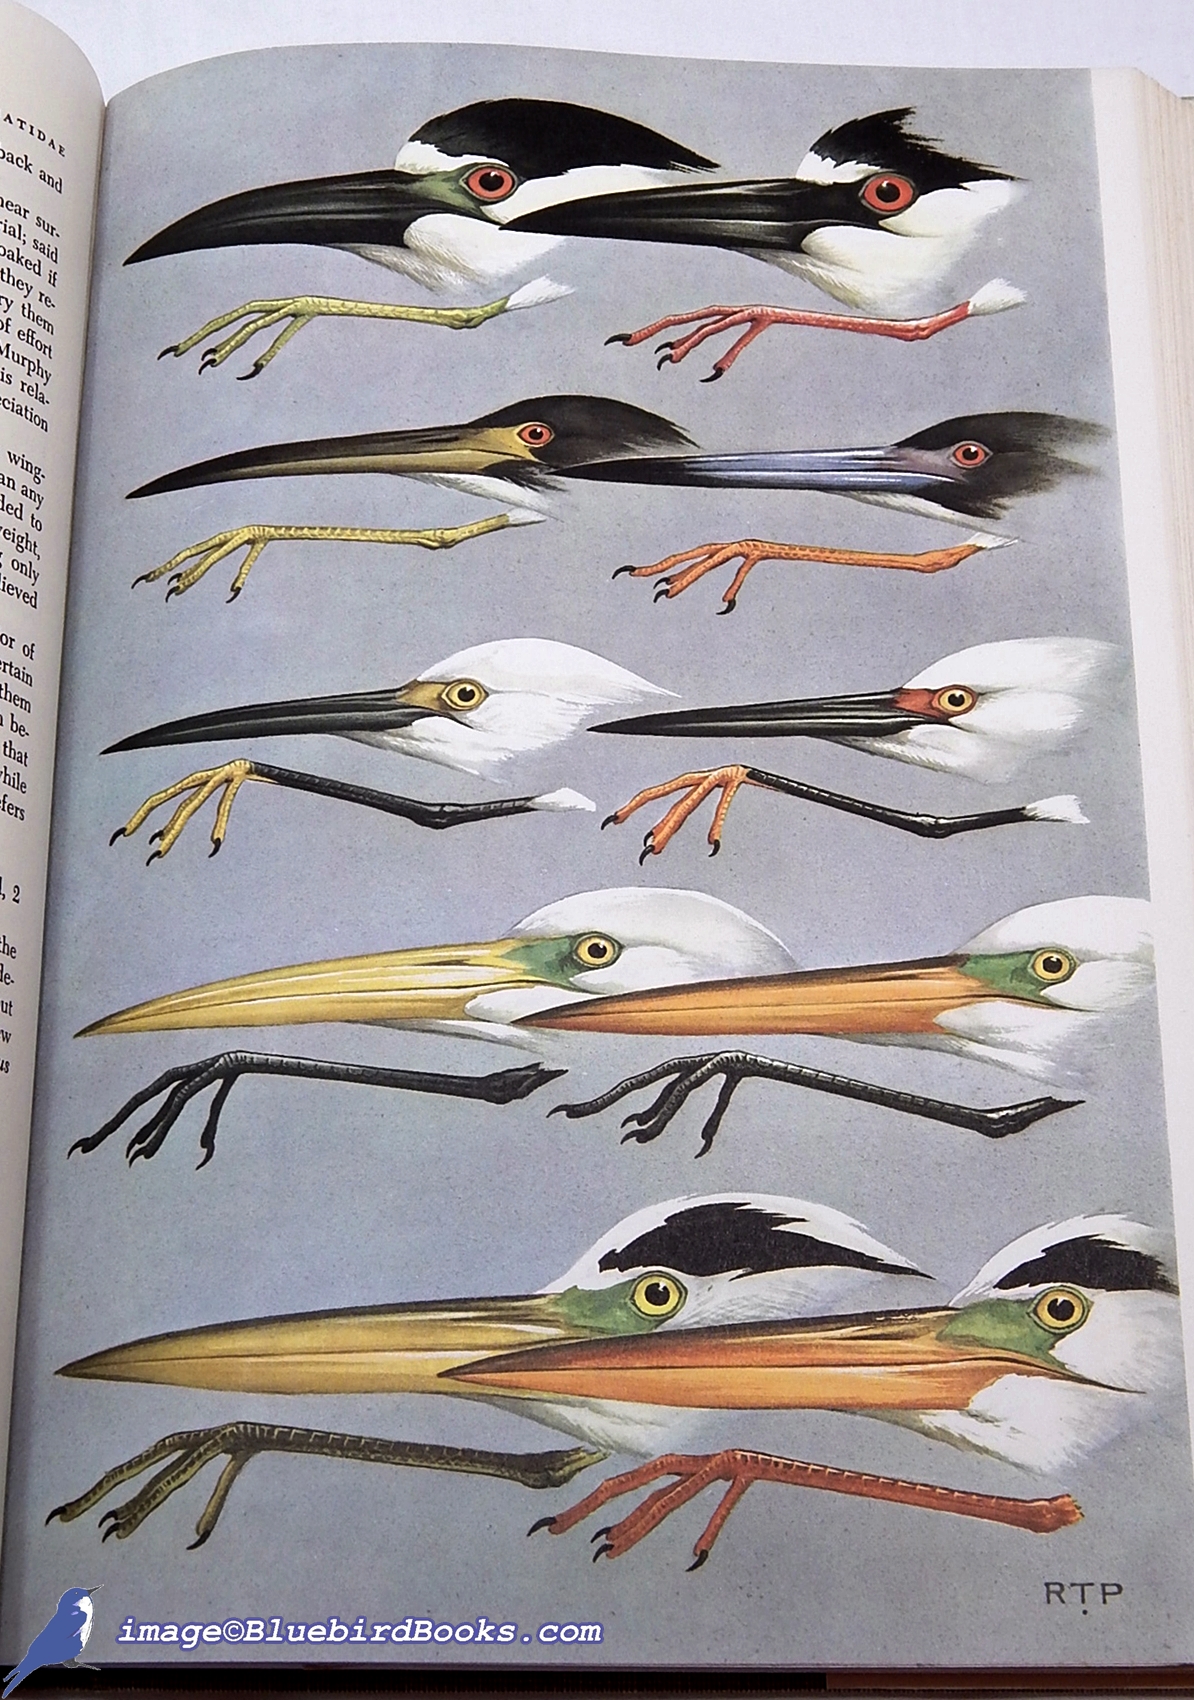 PALMER, RALPH (EDITOR) - Handbook of North American Birds: Volume 1, Loons Through Flamingos